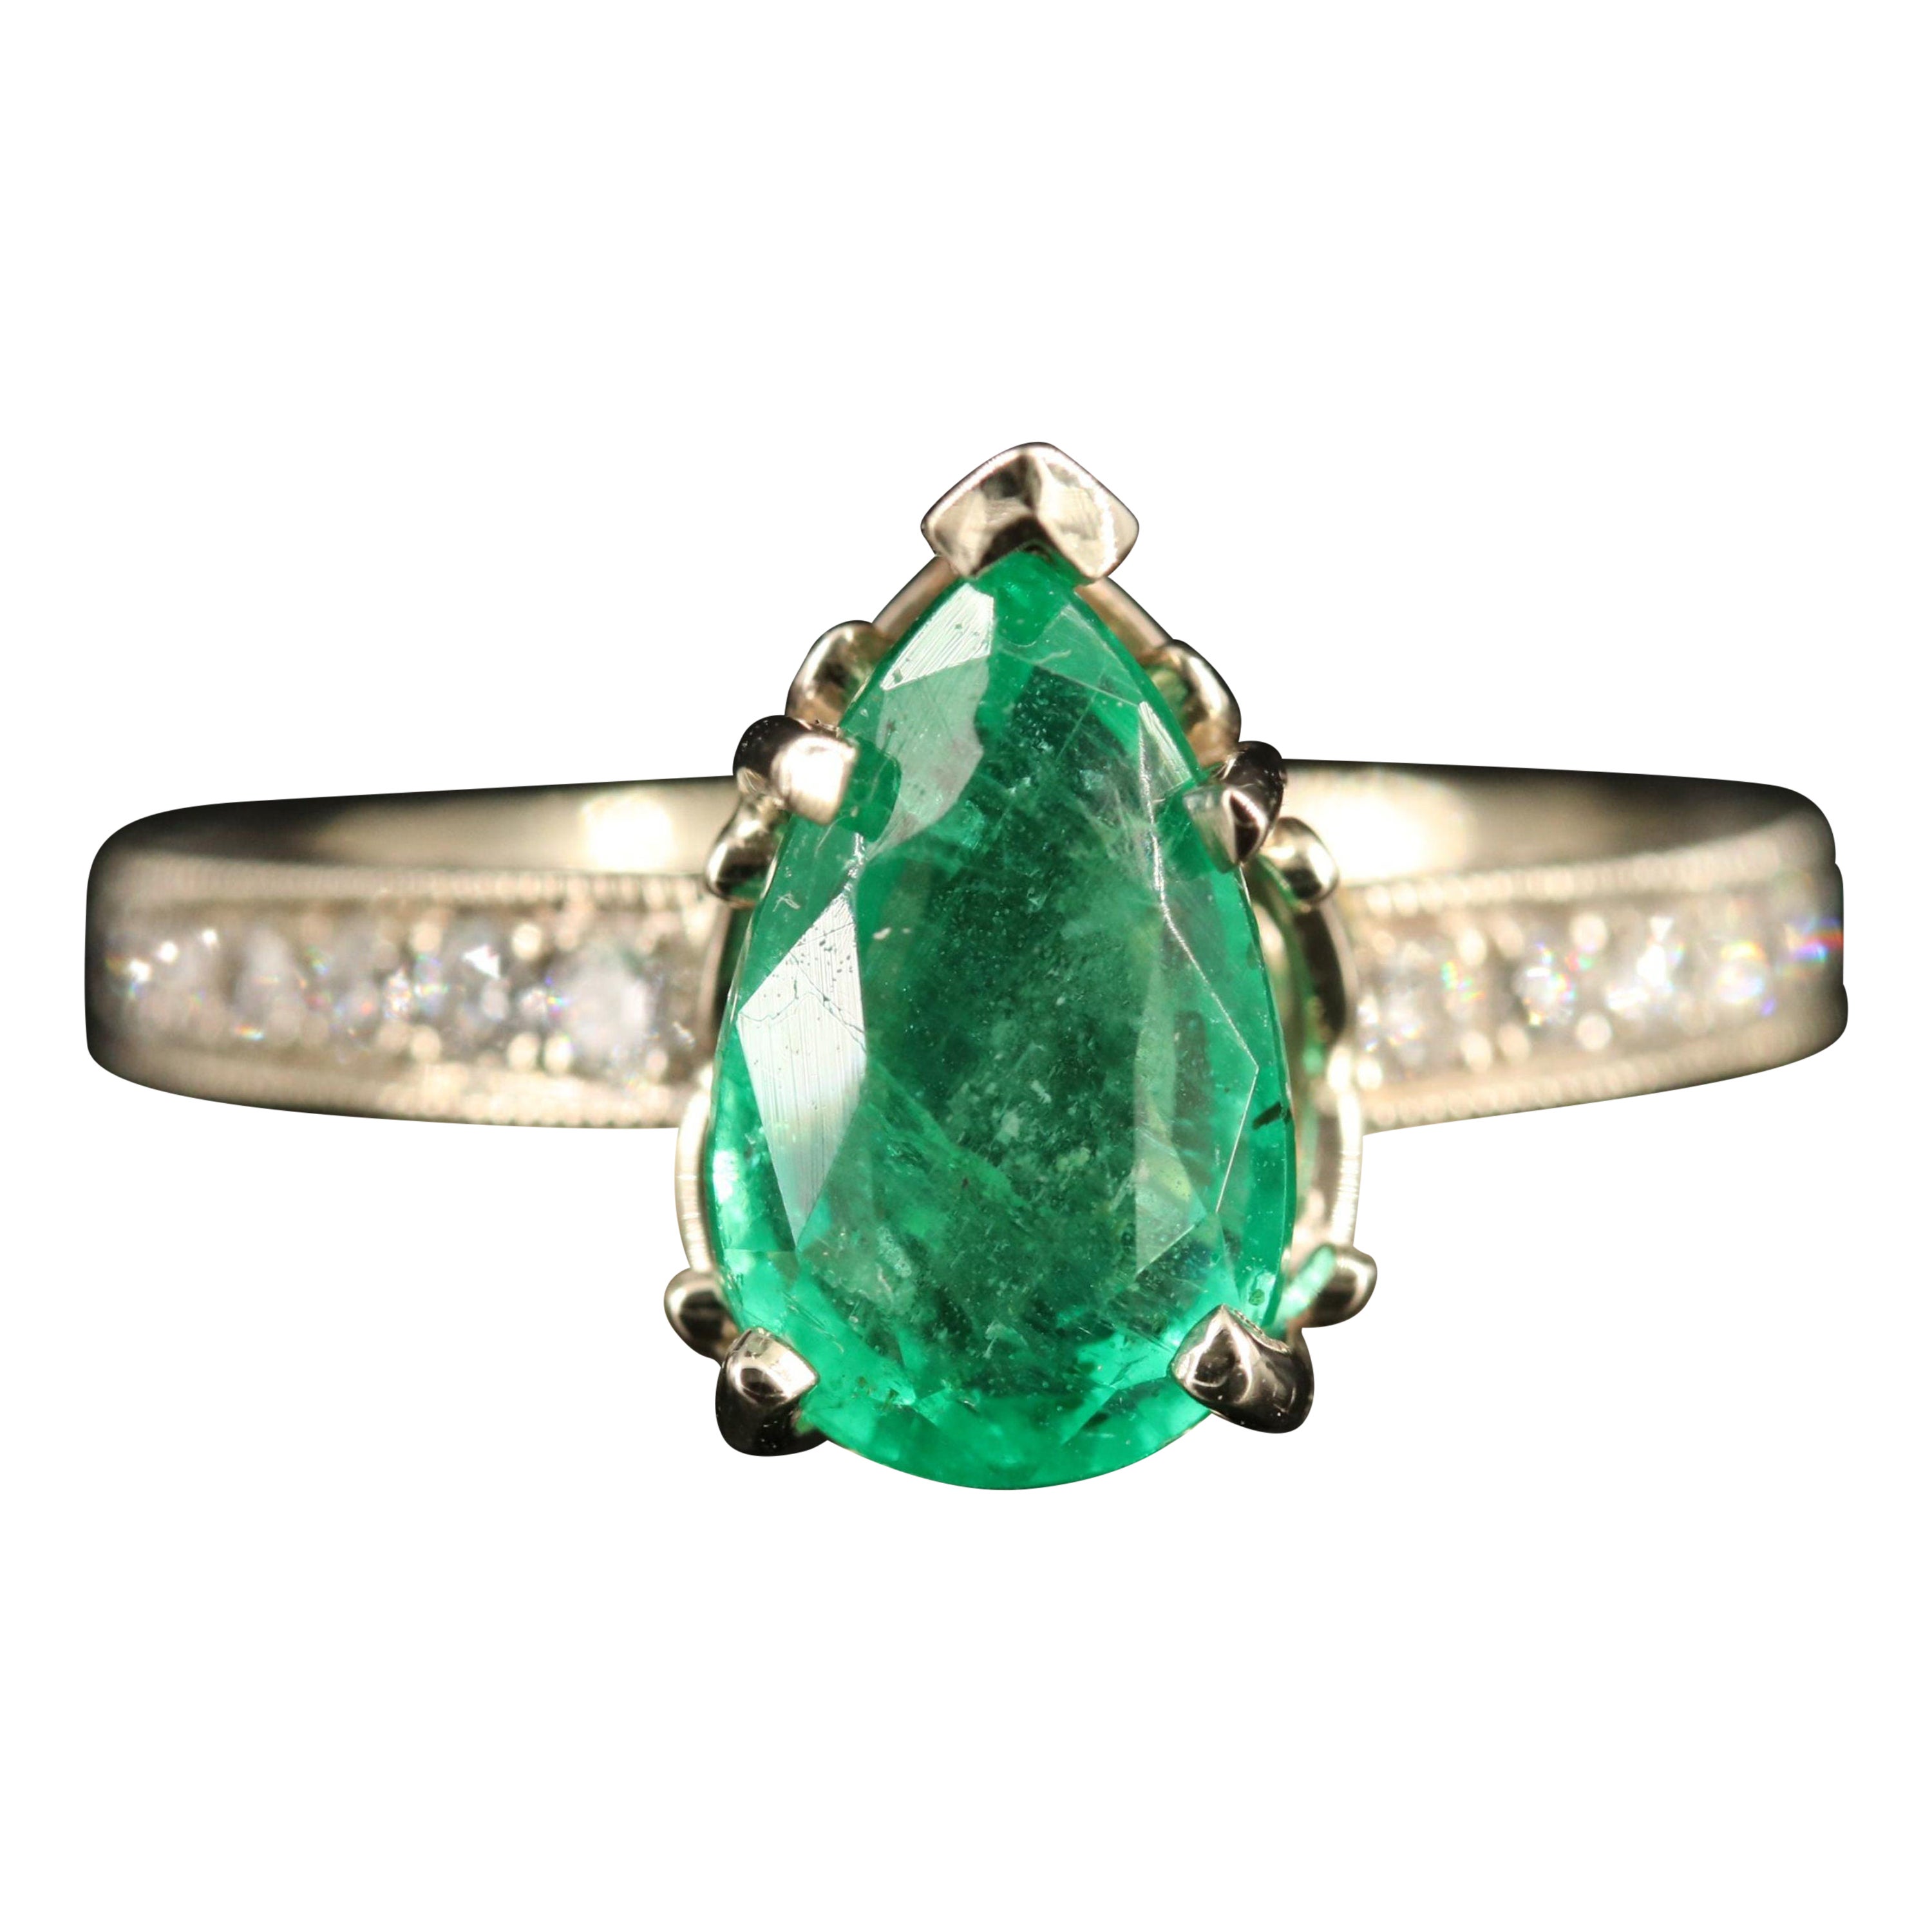 For Sale:  1.5 Carat Pear Cut Emerald Diamond Engagement Ring Minimalist Gold Wedding Ring